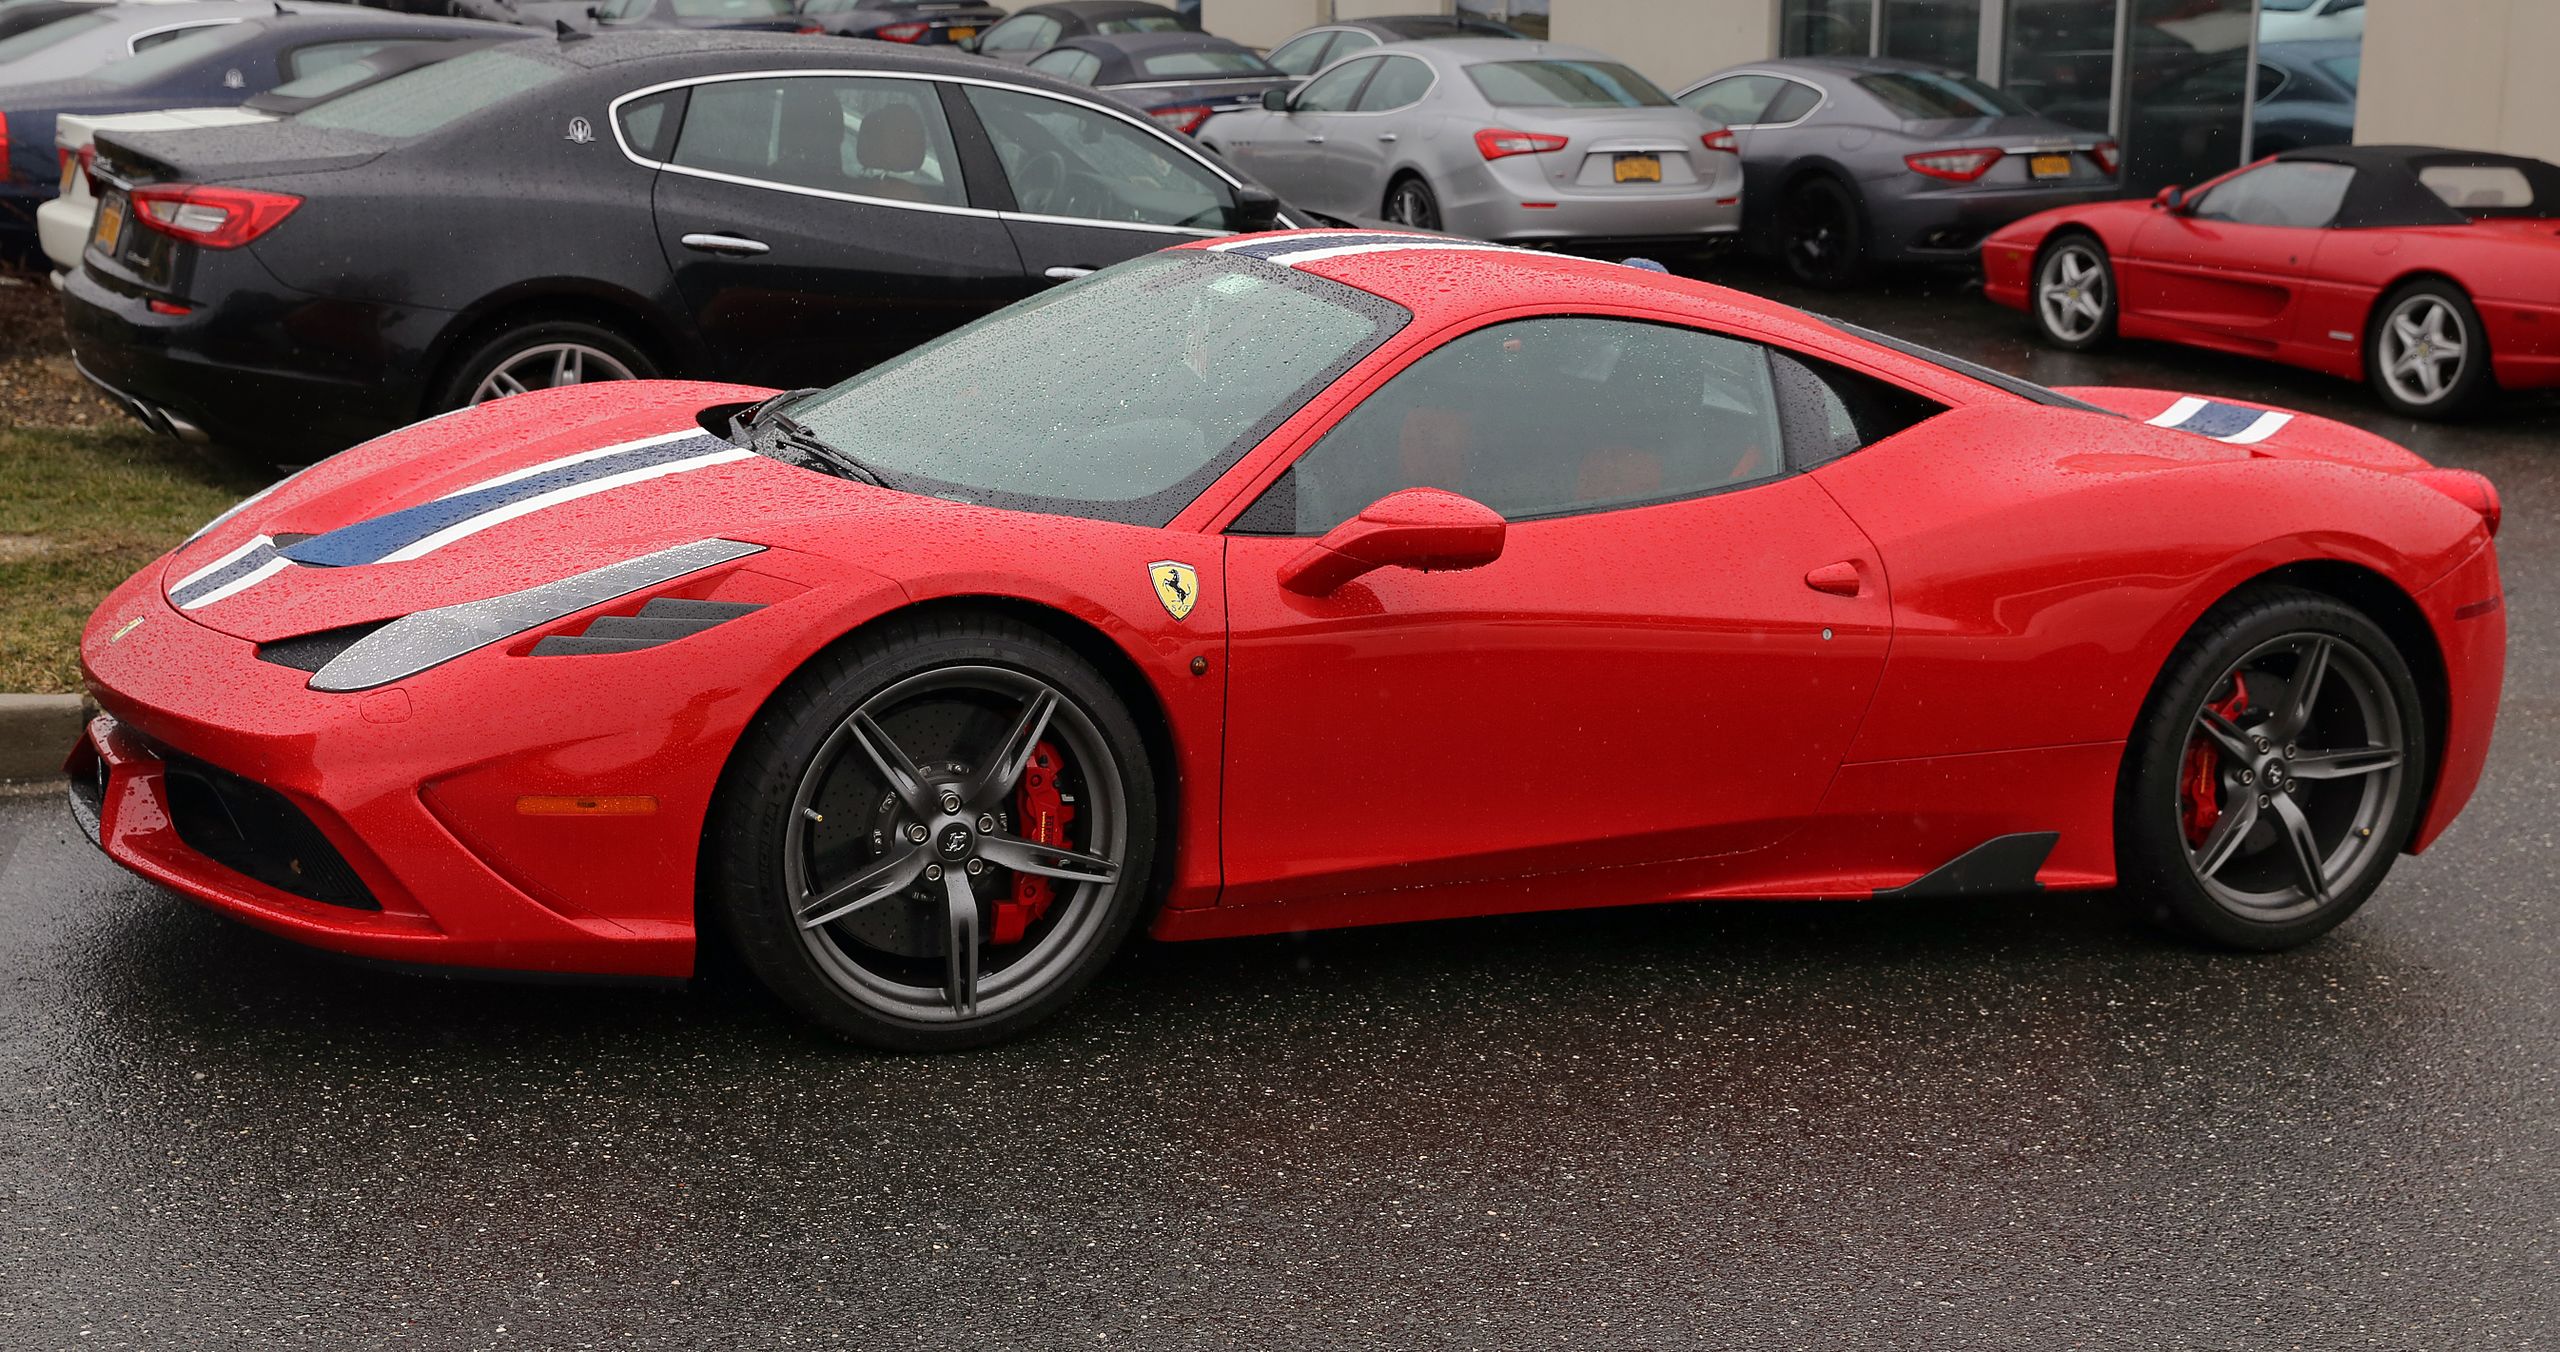 File:2015 Ferrari 458 Speciale, front left.jpg - Wikimedia Commons